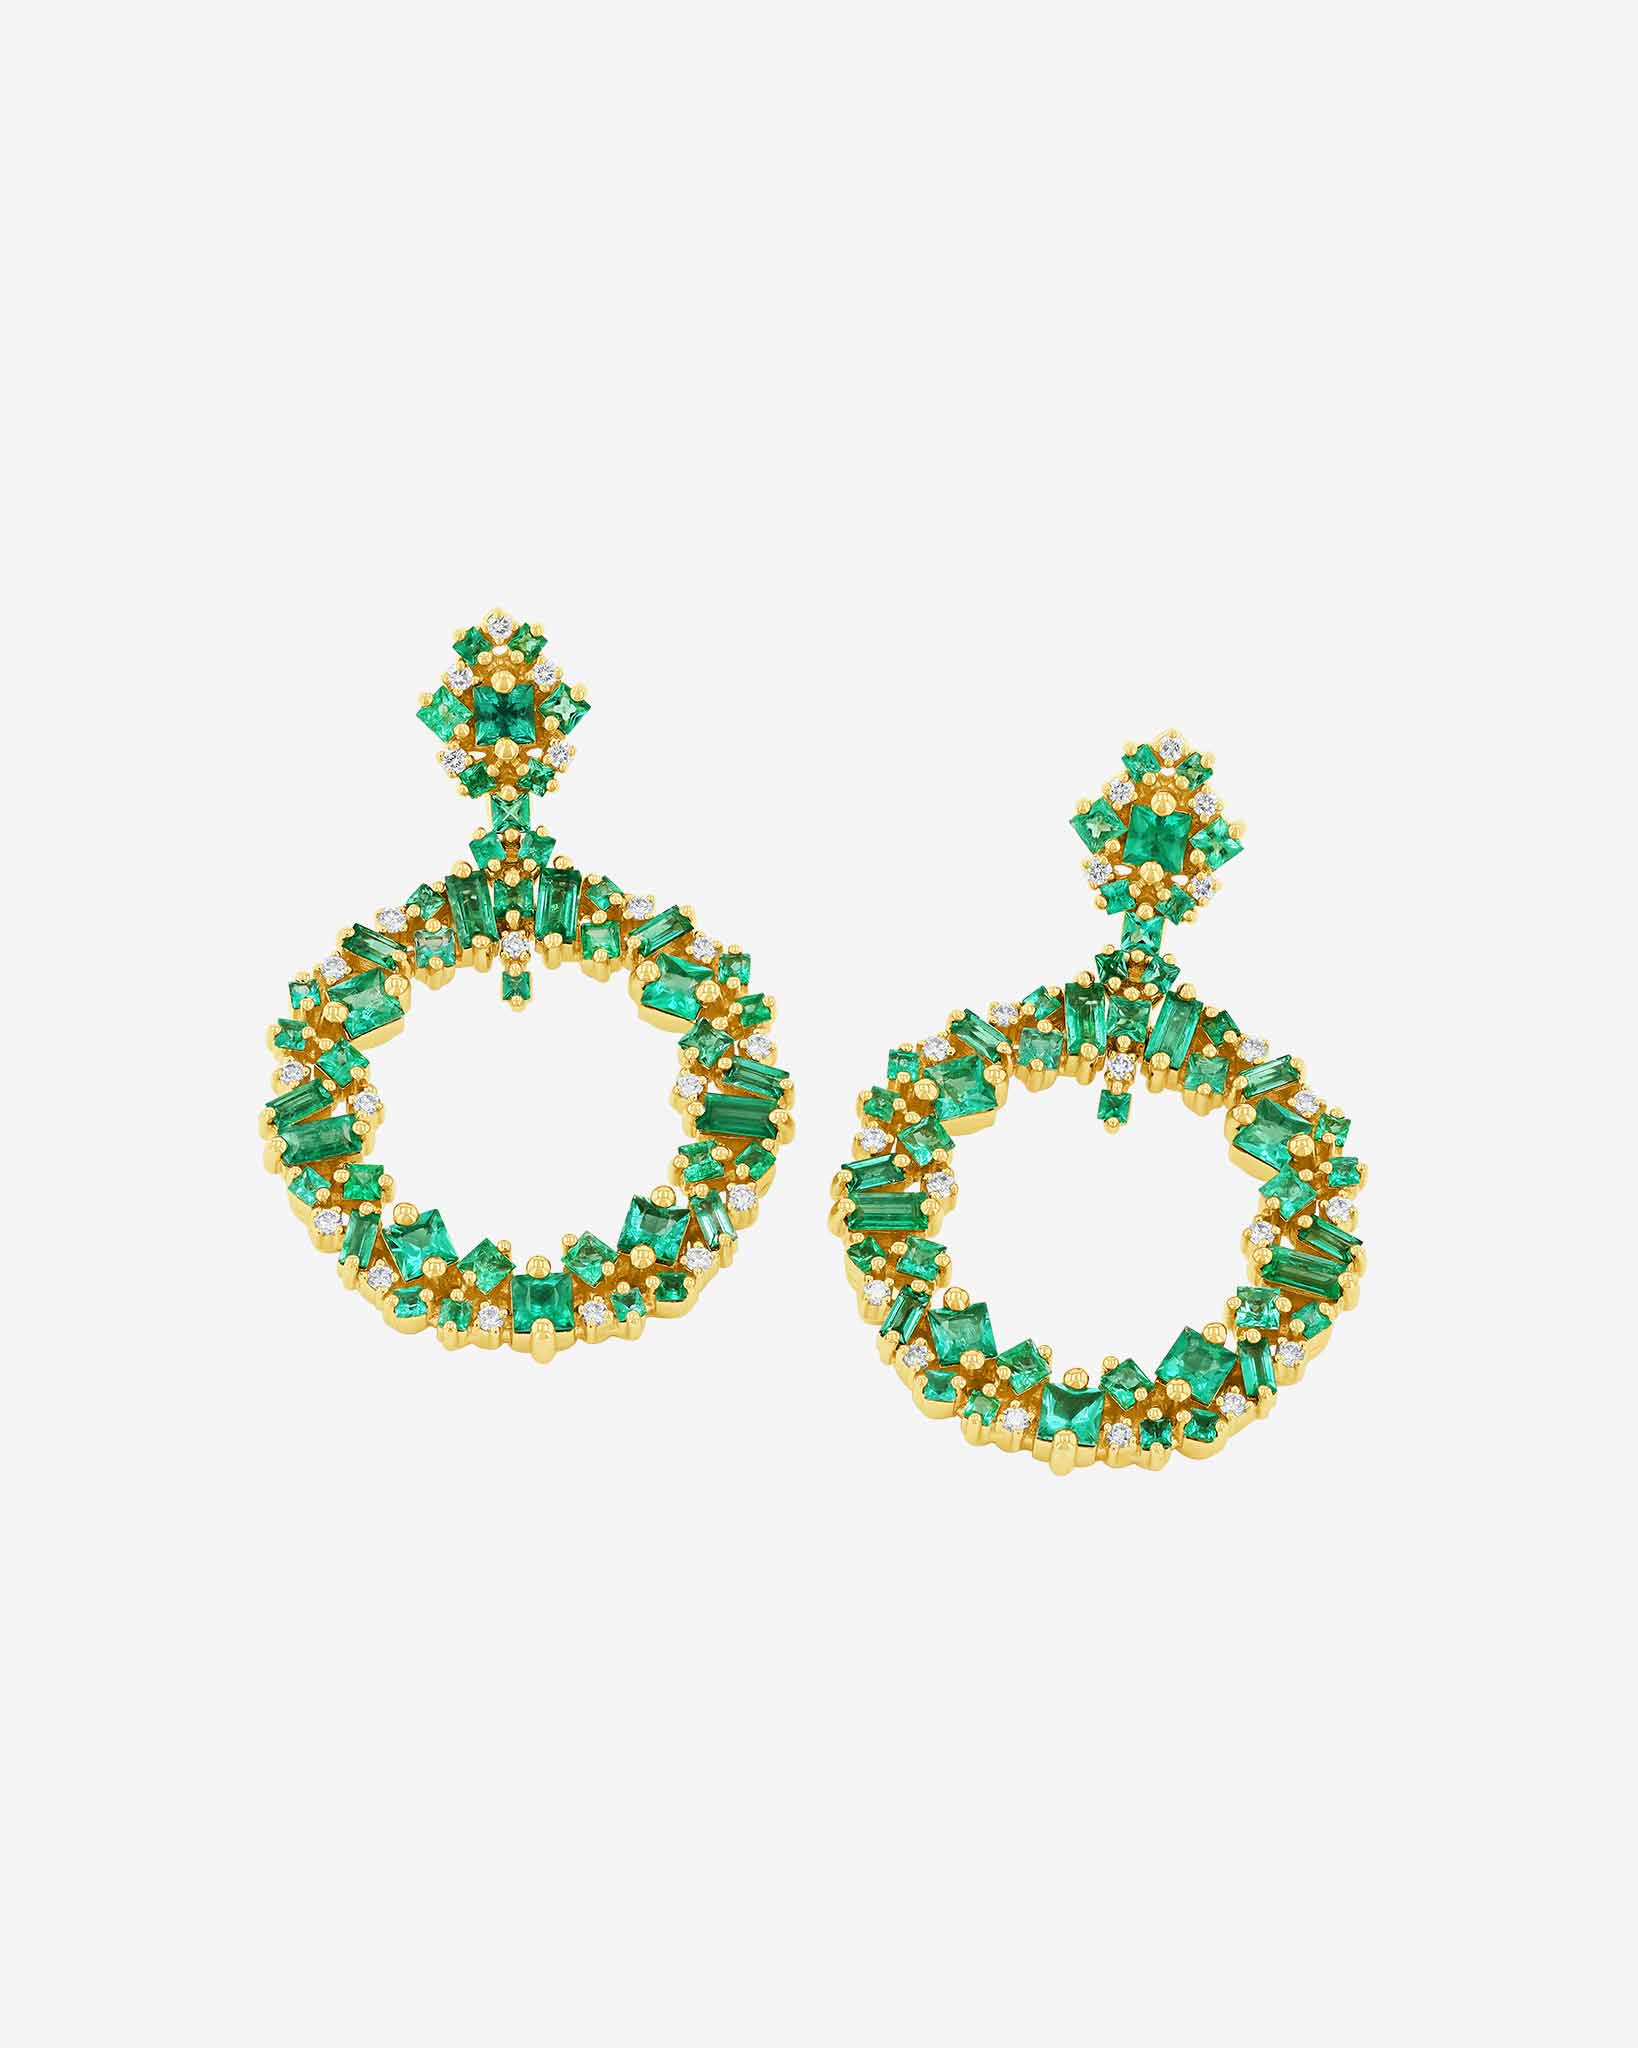 Suzanne Kalan La Fantaisie Eclipse Emerald Drop Earrings in 18k yellow gold